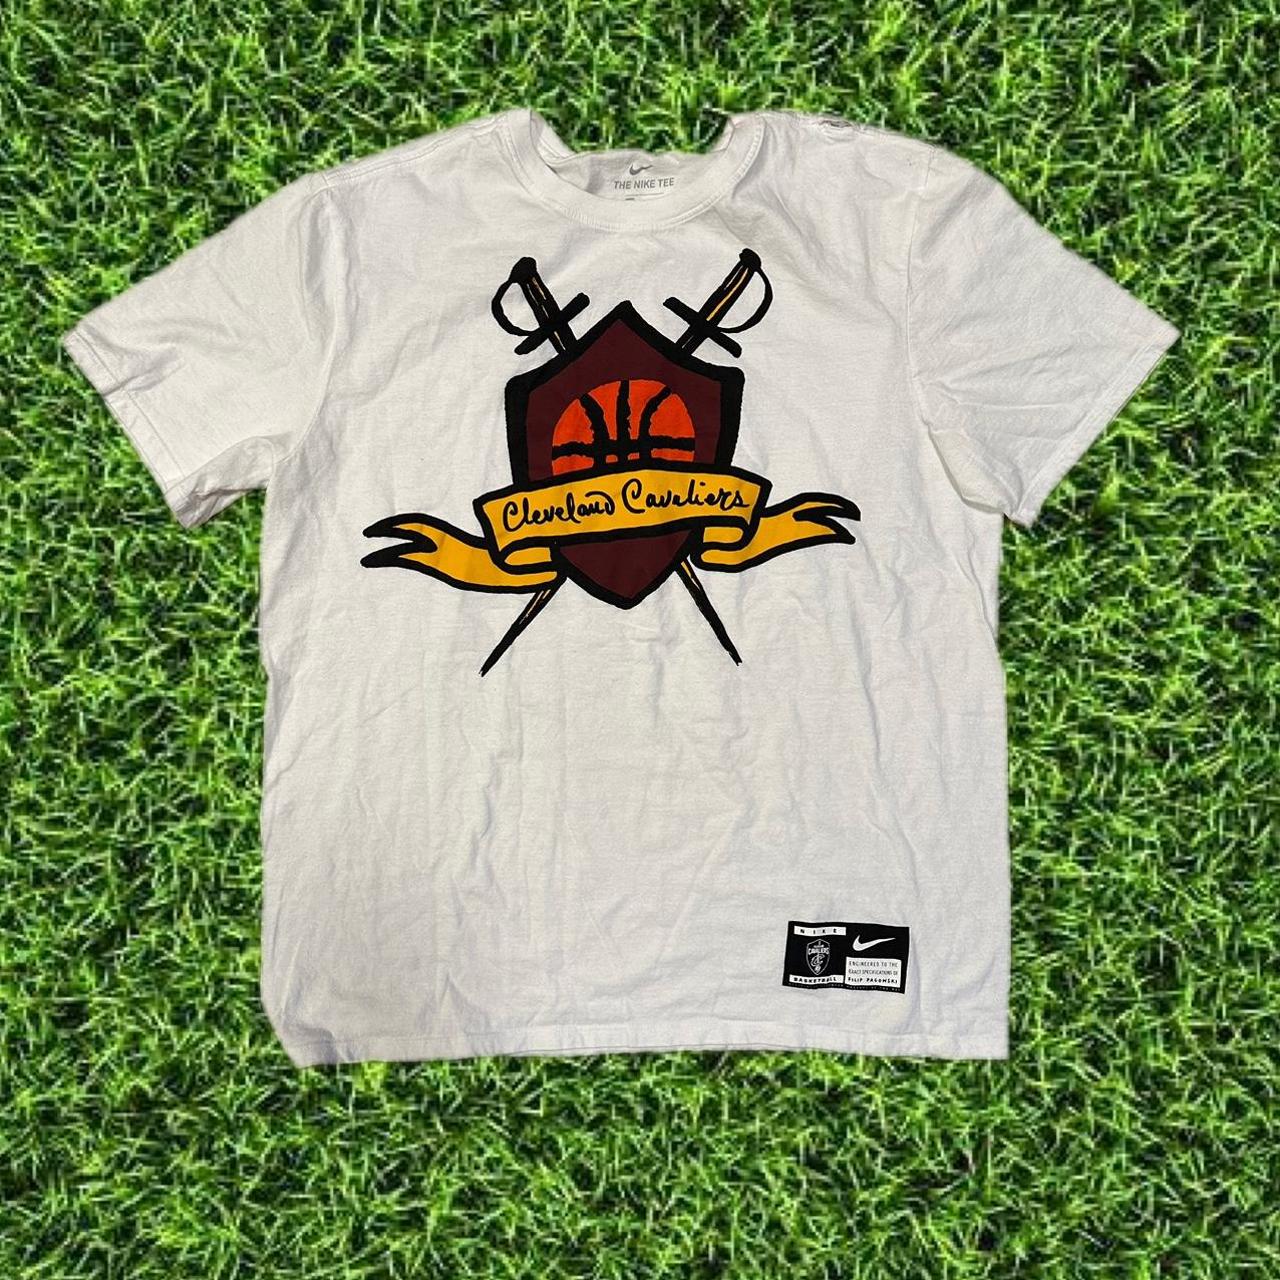 Cleveland Cavaliers Men's Nike NBA T-Shirt